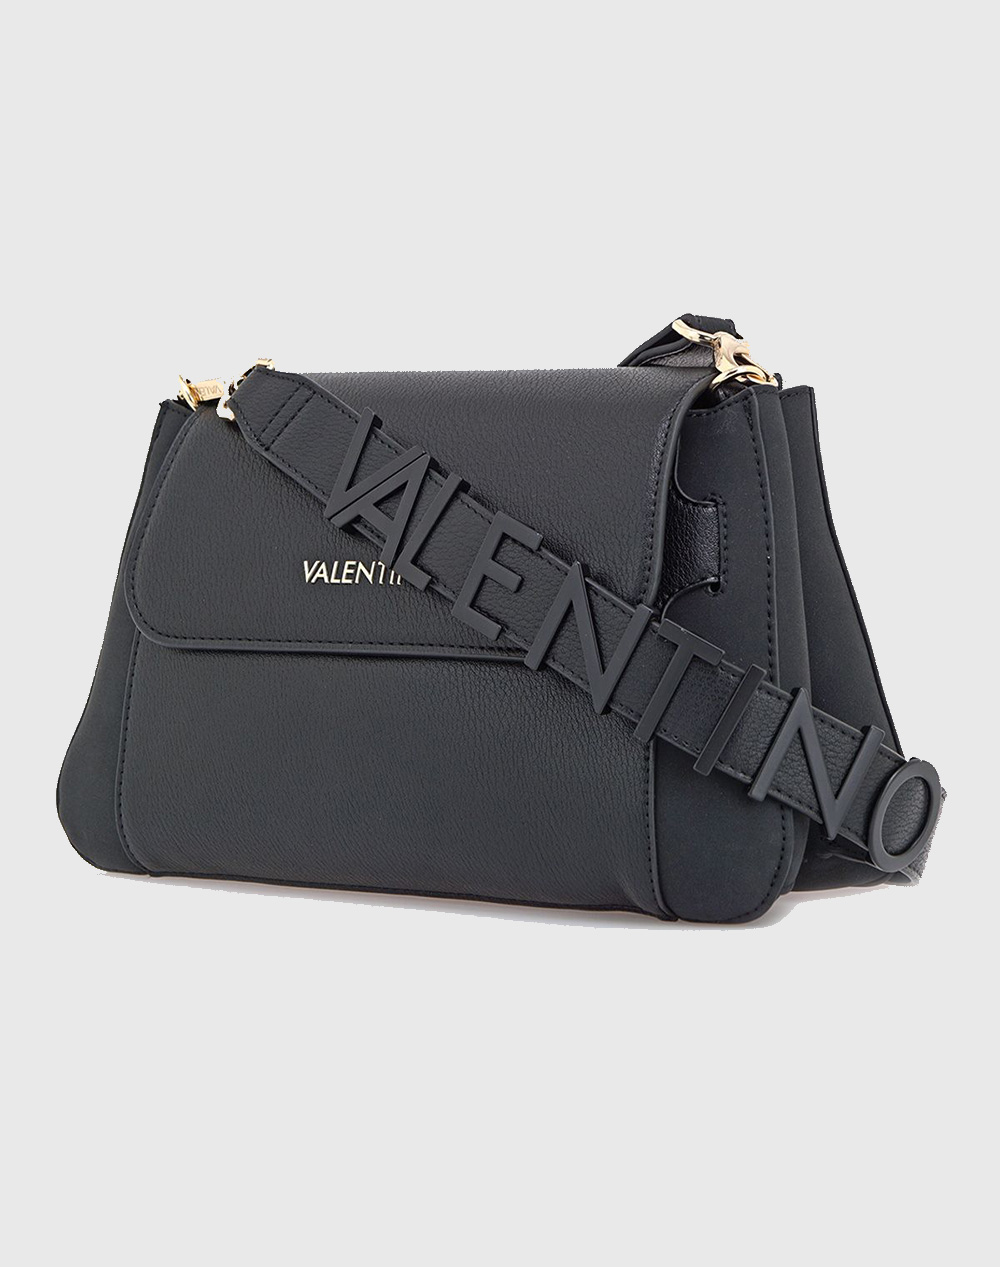 VALENTINO BAGS SHOULDER BAGS (Dimensions: 31 x 39 x 11 cm) - Black